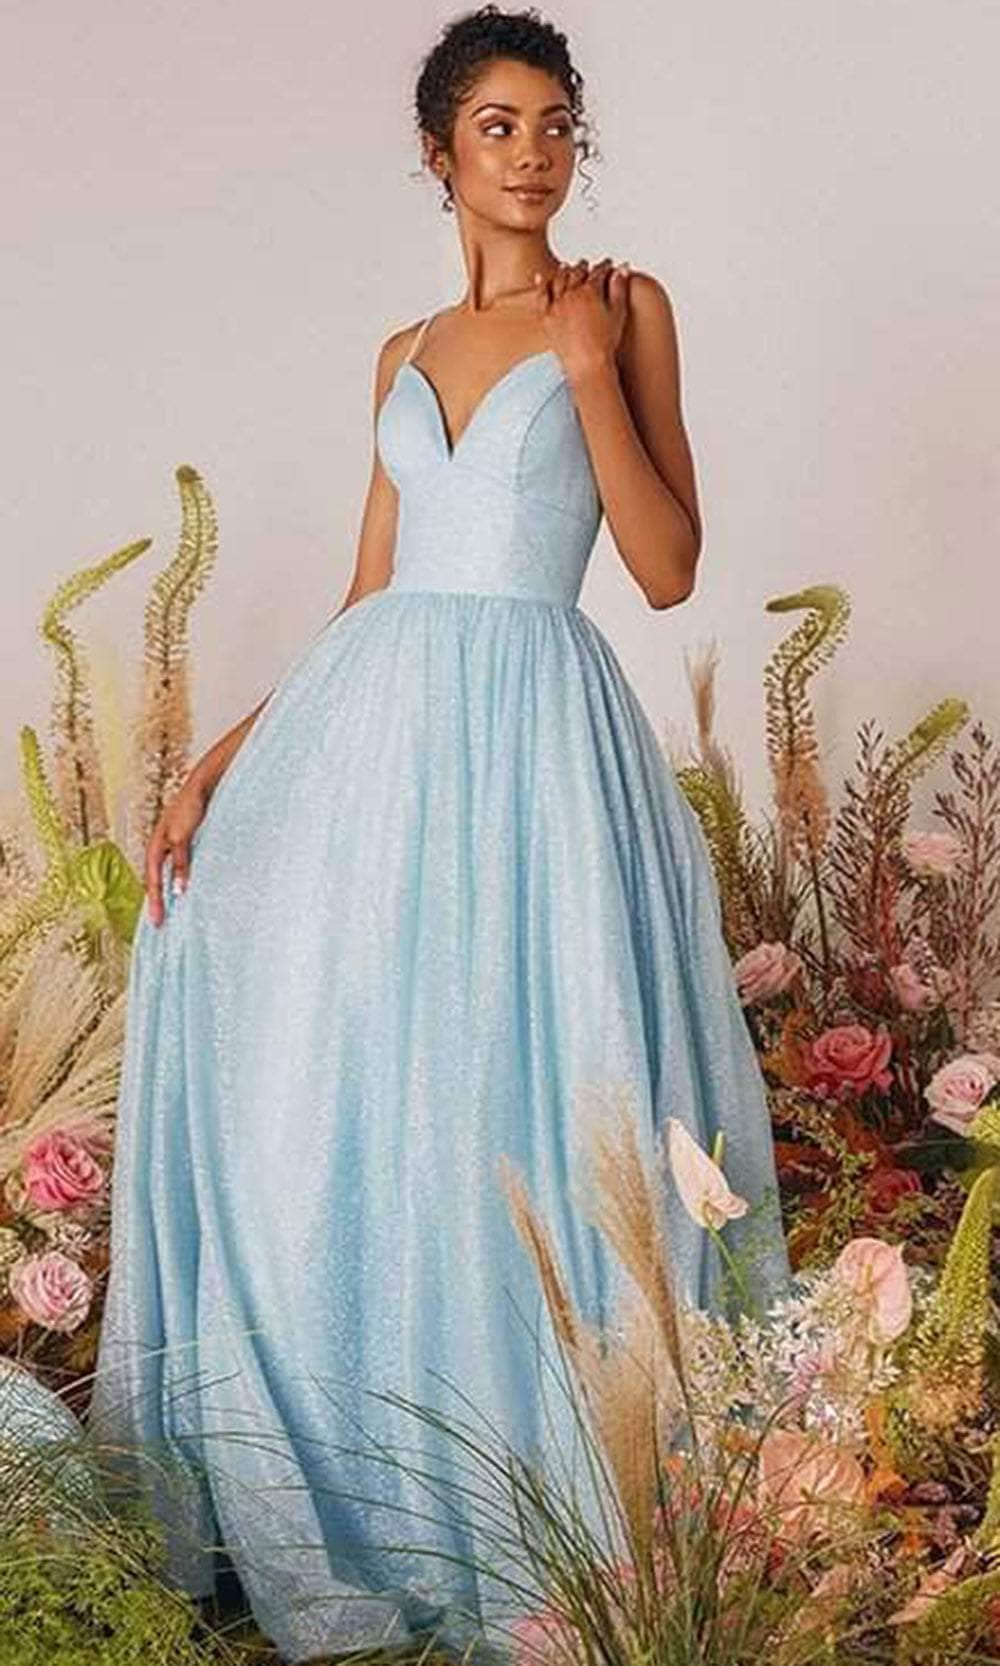 Eureka Fashion 9009 - Glitter Mesh Plunging V-Neck Prom Gown